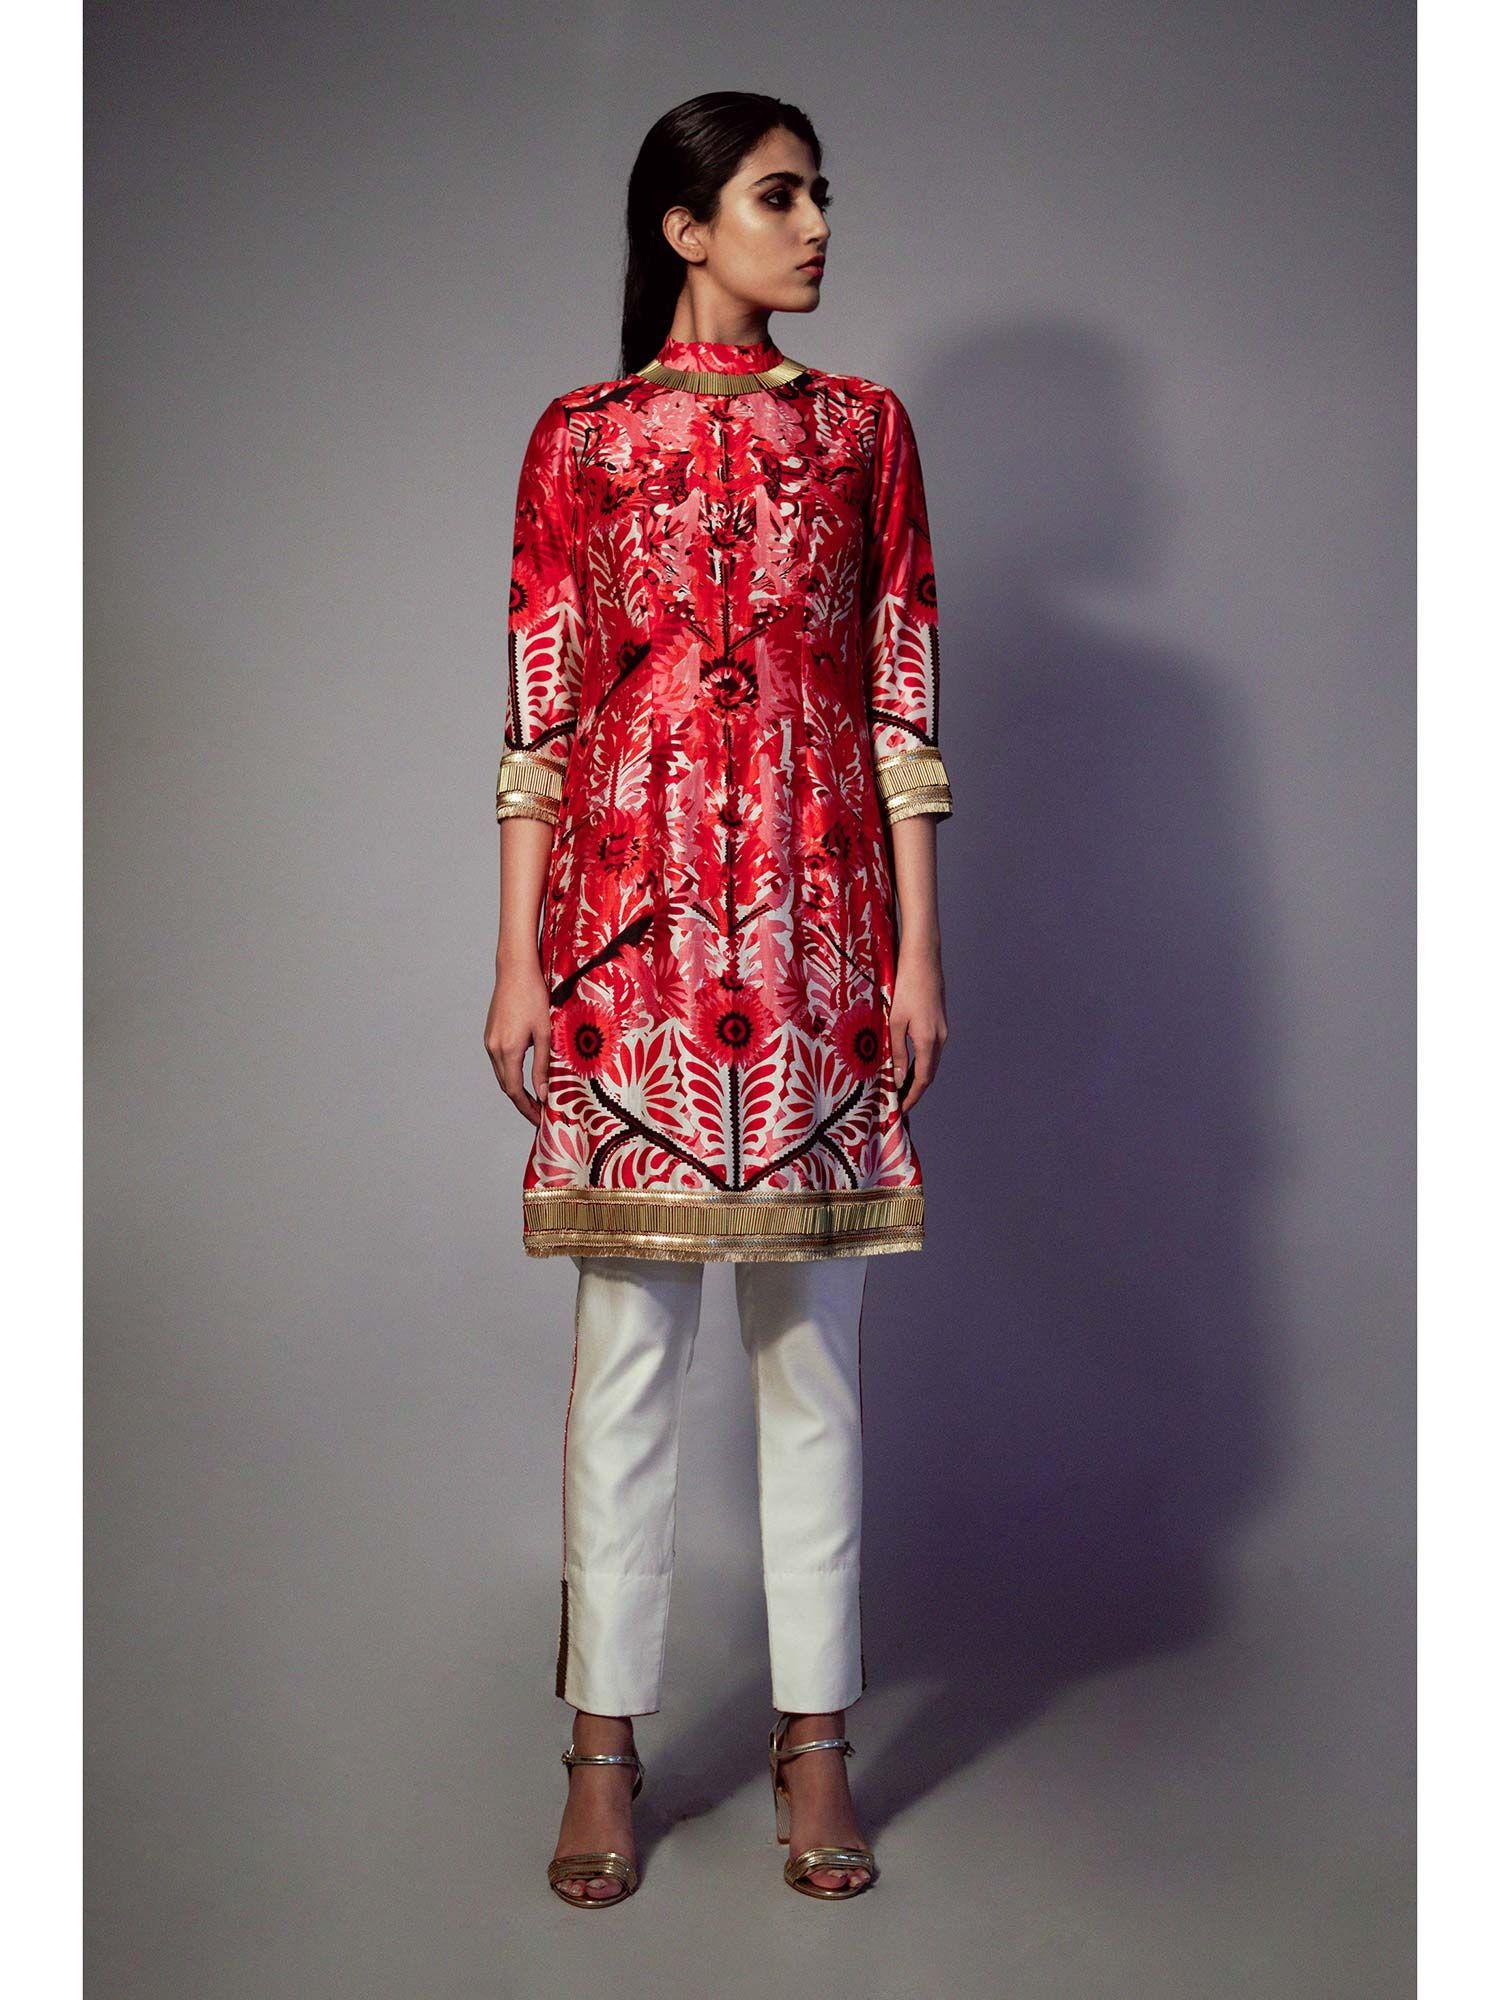 multi-color printed and embellished kurta in chanderi